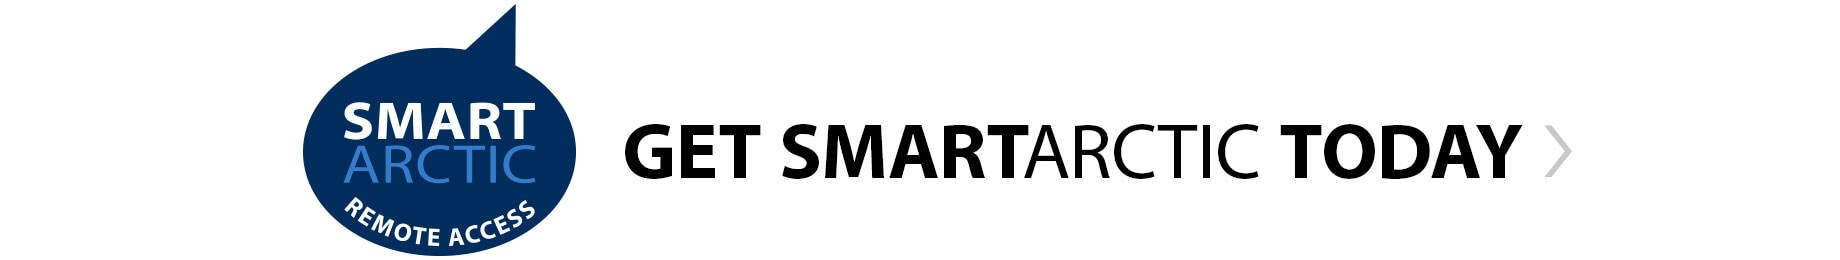 Get SmartArctic - TITAN Containers